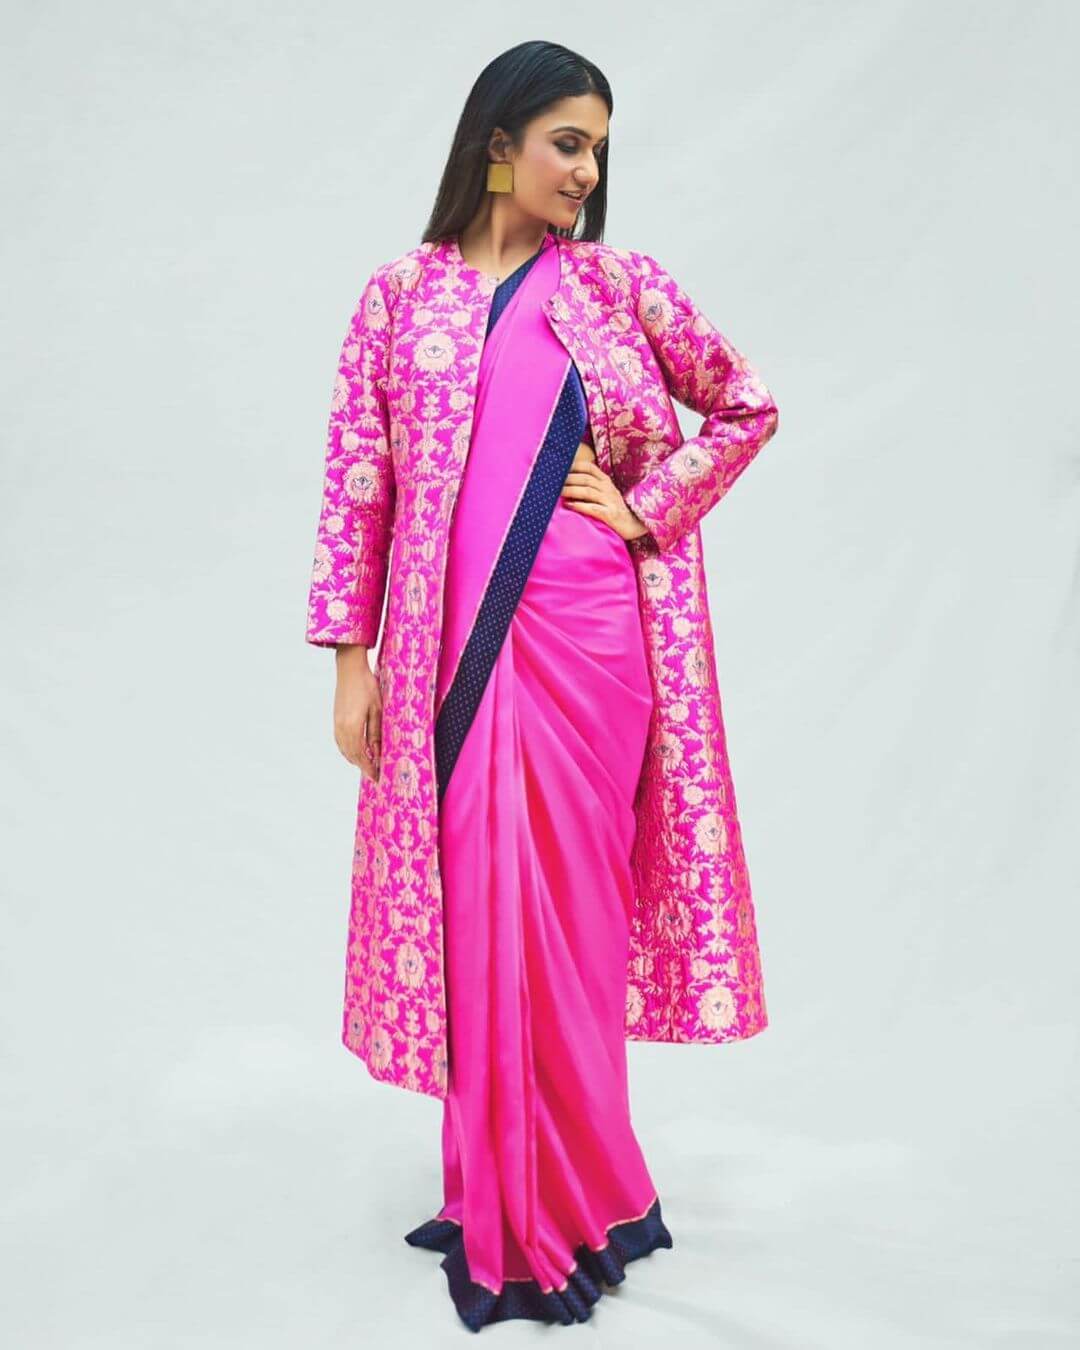 Amruta Subhash Elegant Look In Pink Saree With Pink Long Coat Amruta Subhash Outfit And Looks